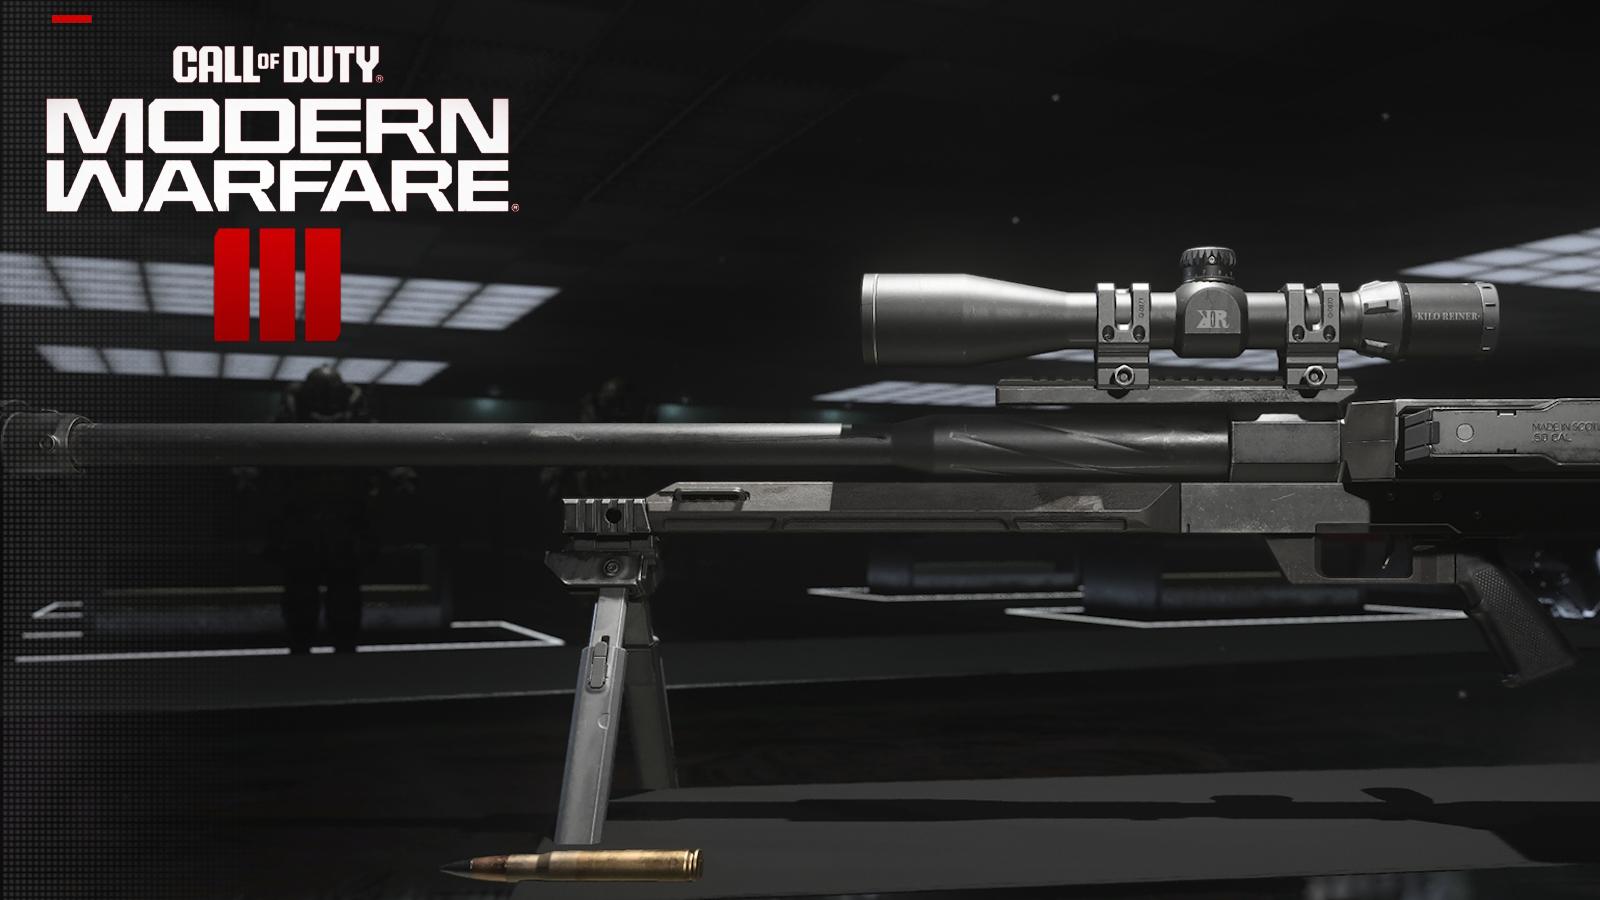 KATT AMR sniper rifle in Modern Warfare 3 with game logo